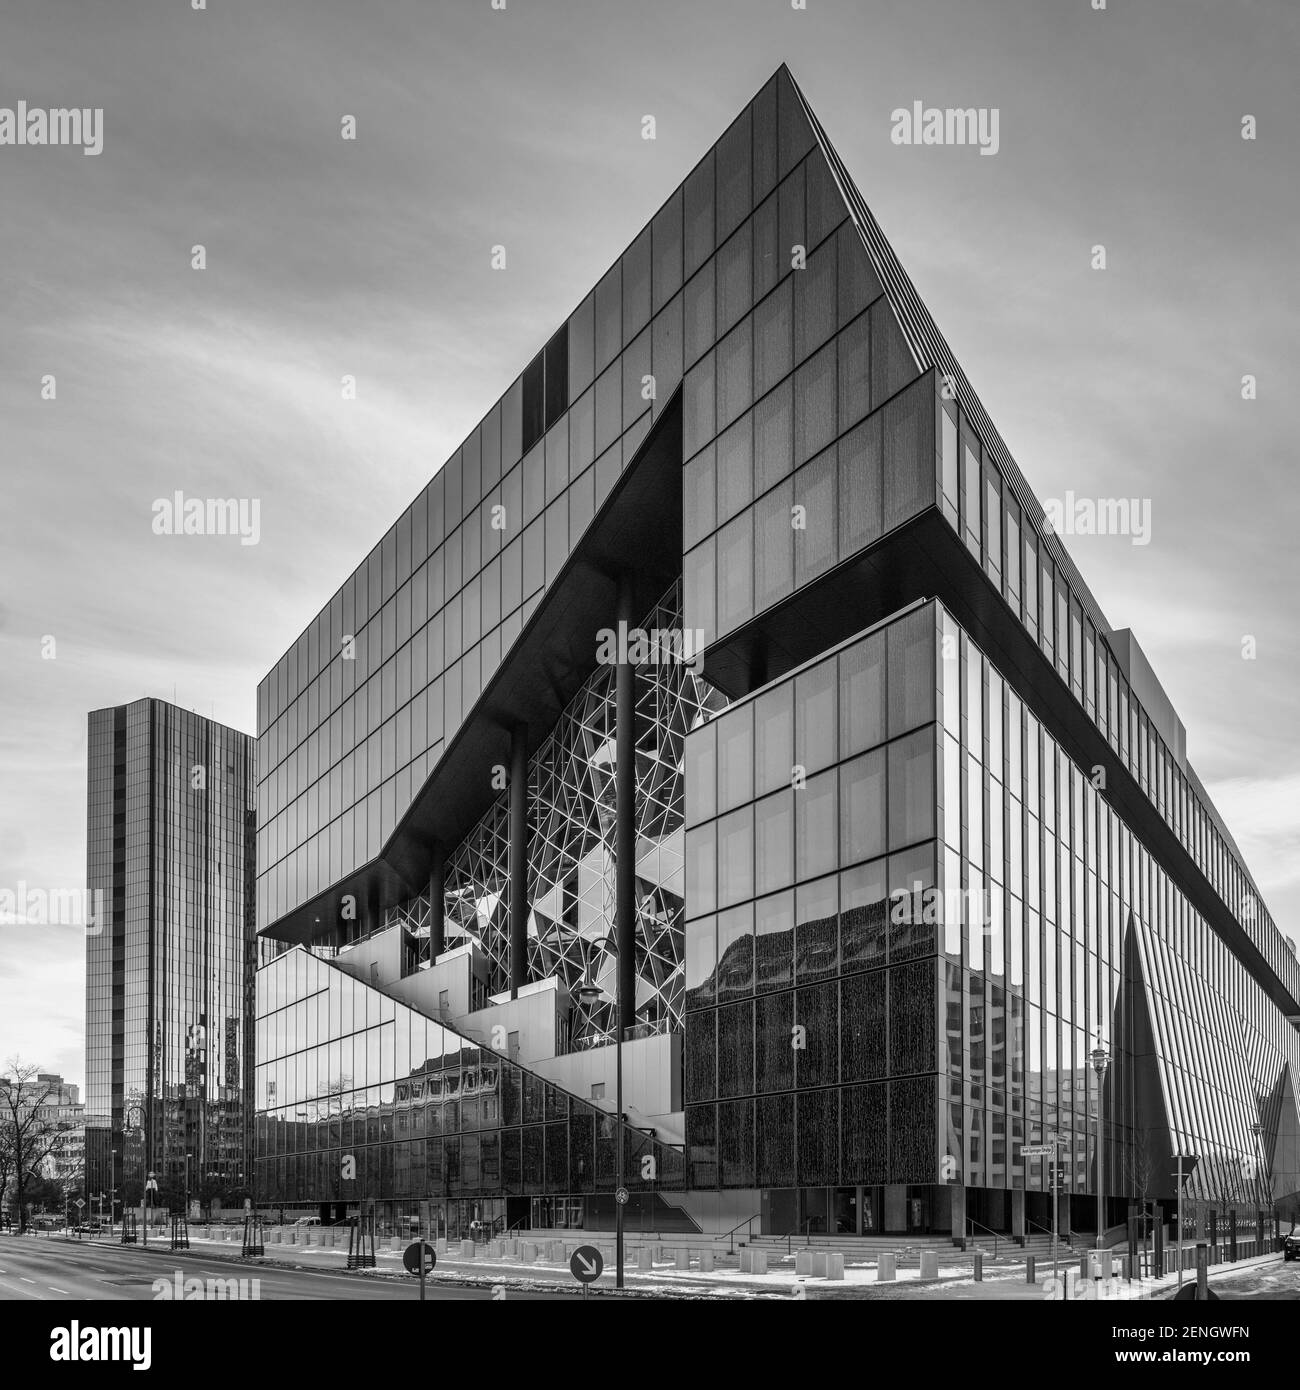 Neubau Axel-Springer Verlagshaus, Architekt Rem Koolhaas, Buero „Office for Metropolitan Architecture“ (OMA) , Aussenaufnahme , Berlin Stock Photo